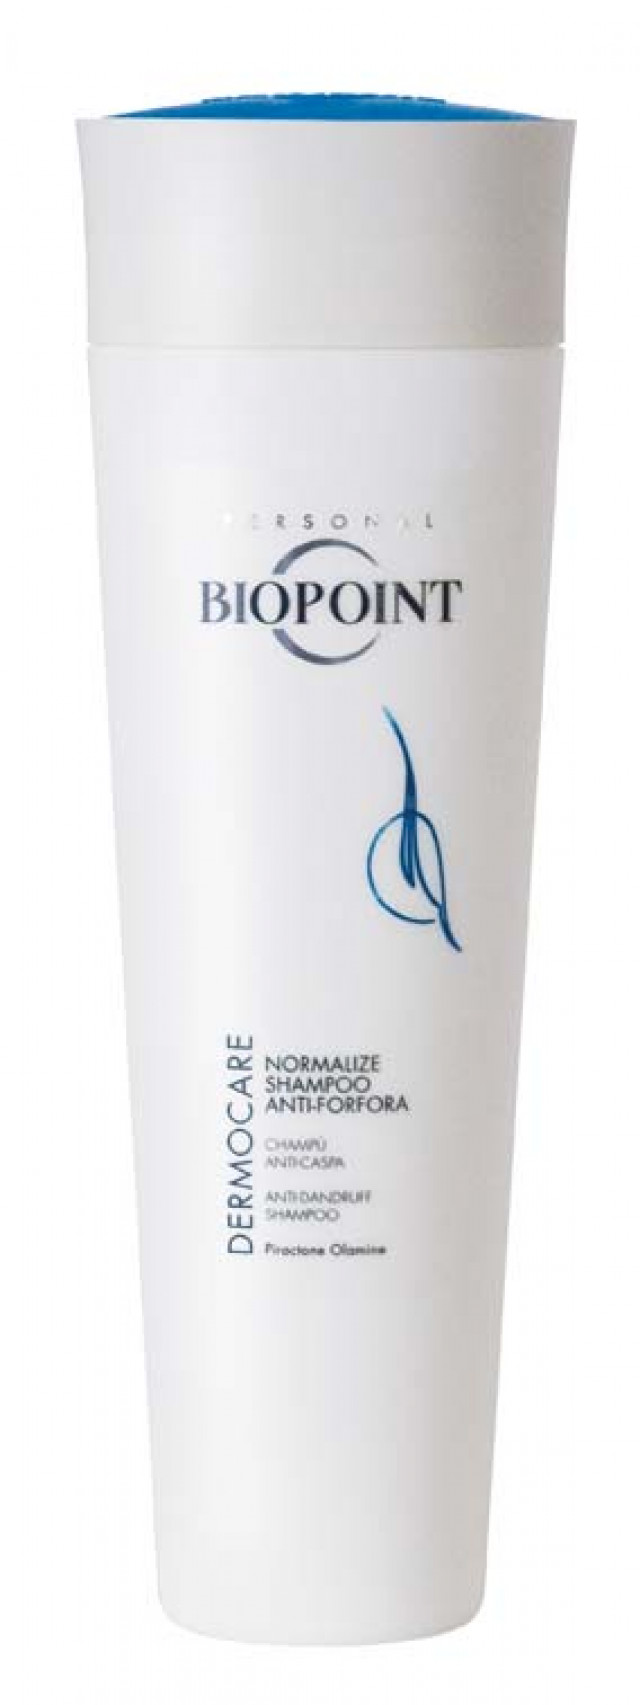 Normalize shampoo antiforfora